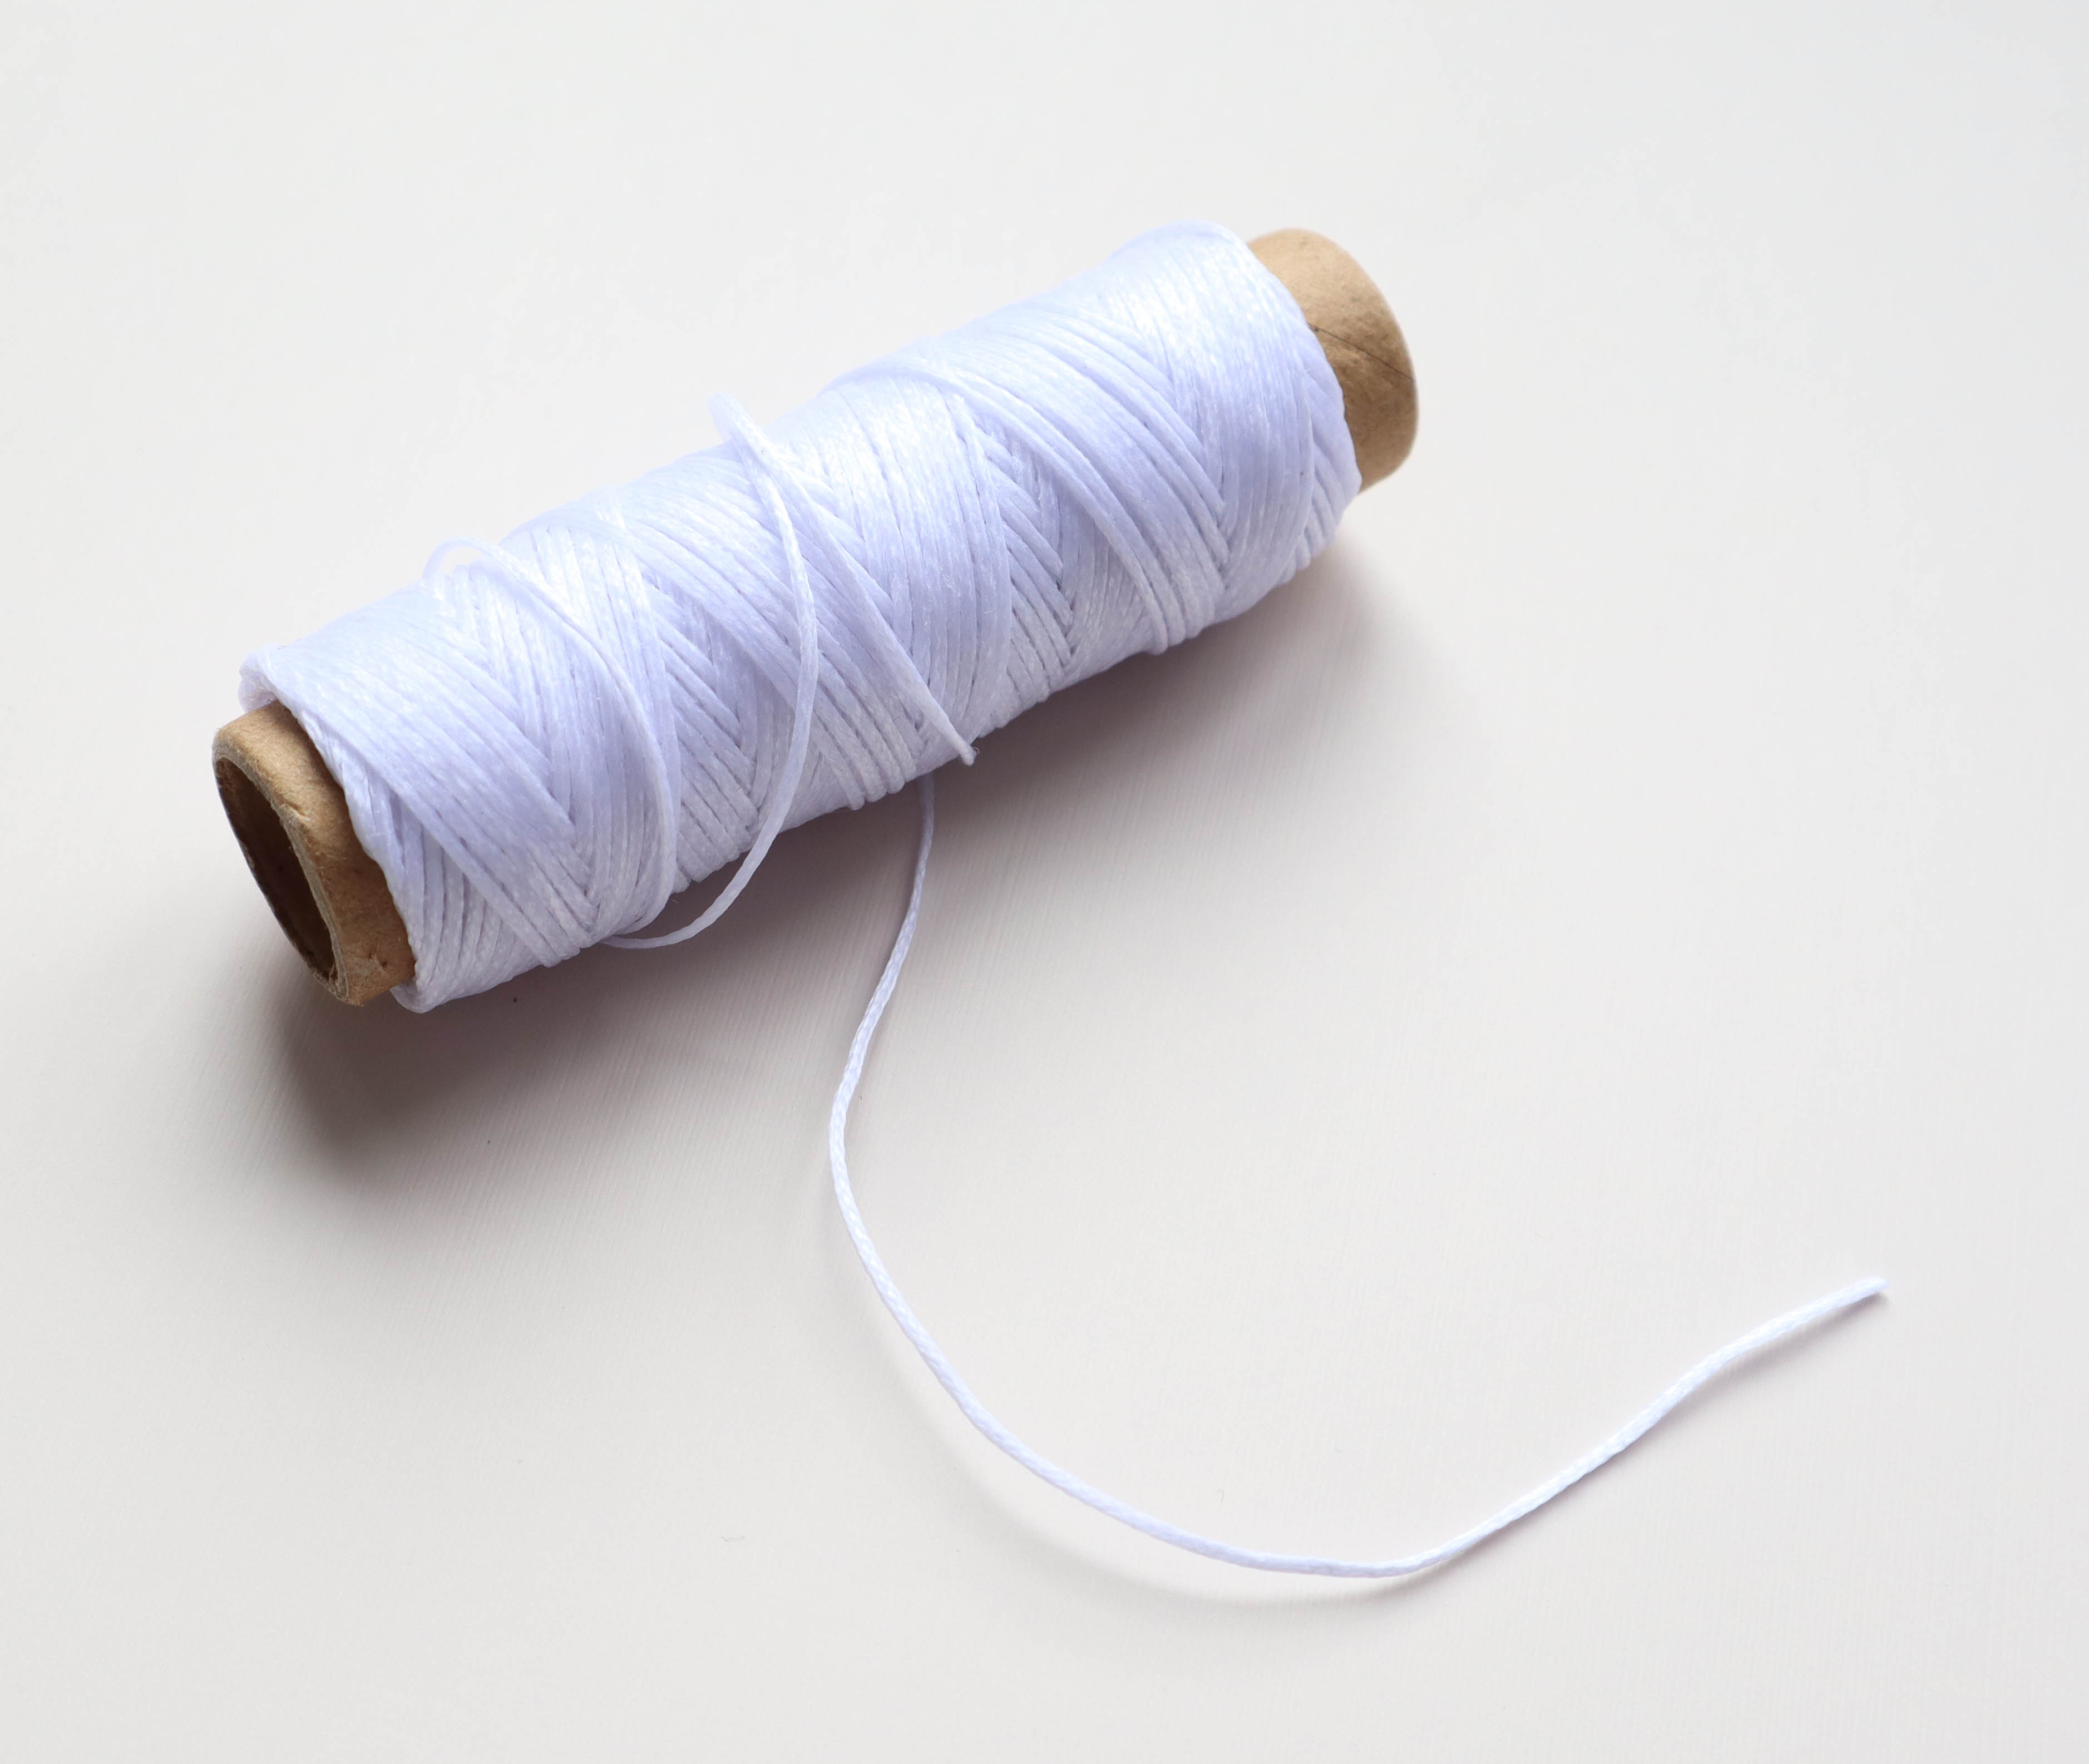 waxed white linen thread